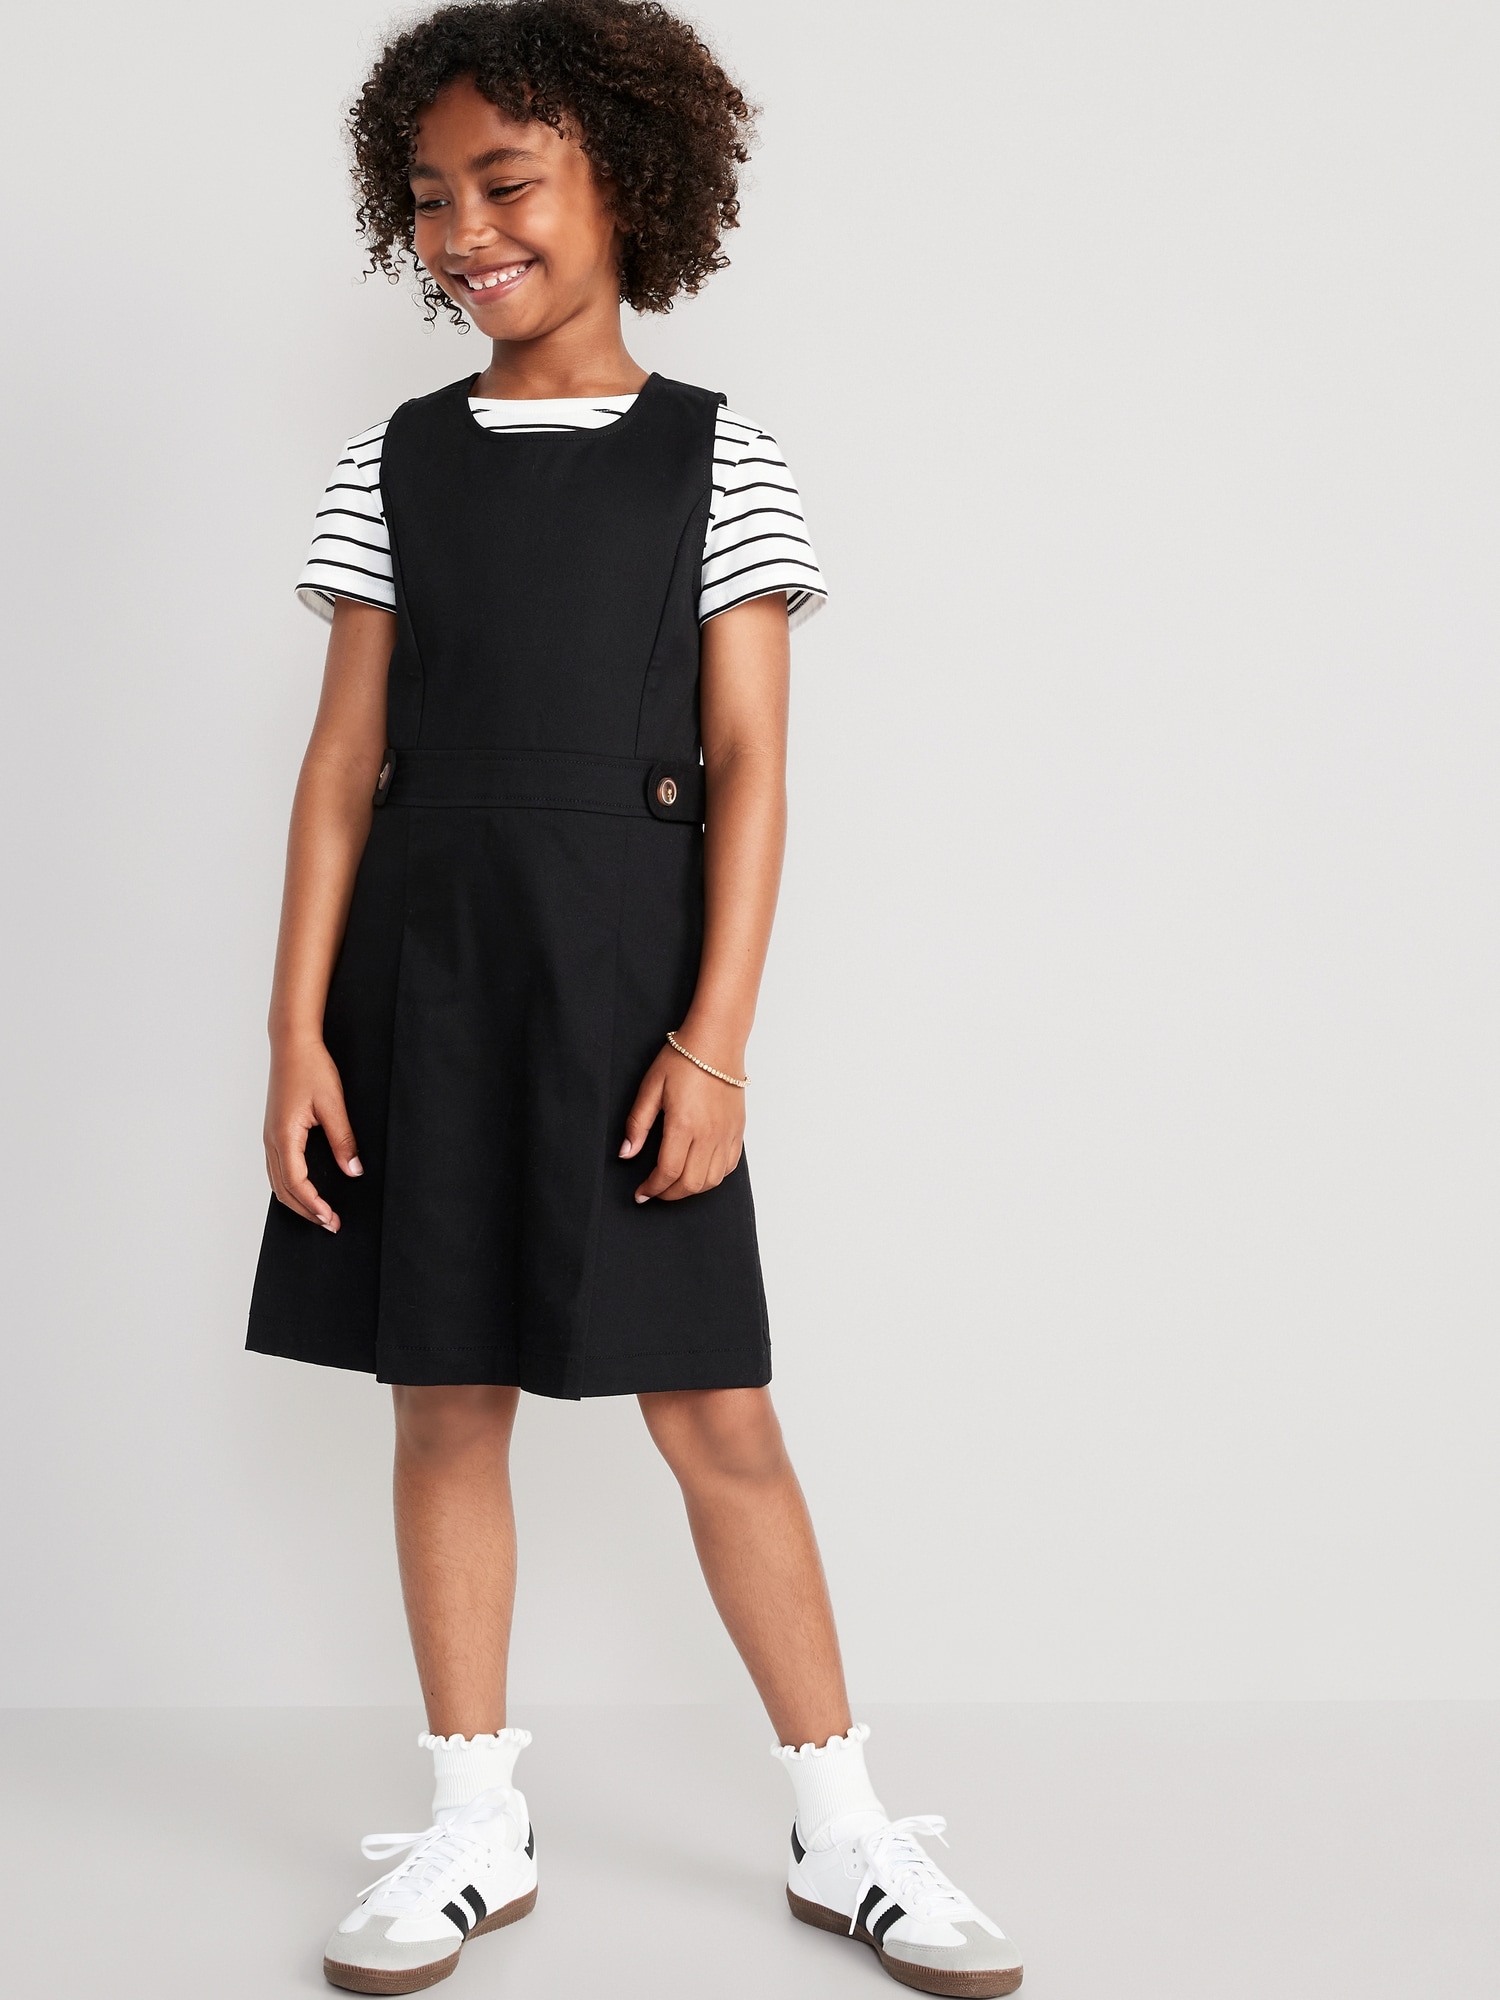 Old Navy Sleeveless School Uniform Dress for Girls black. 1